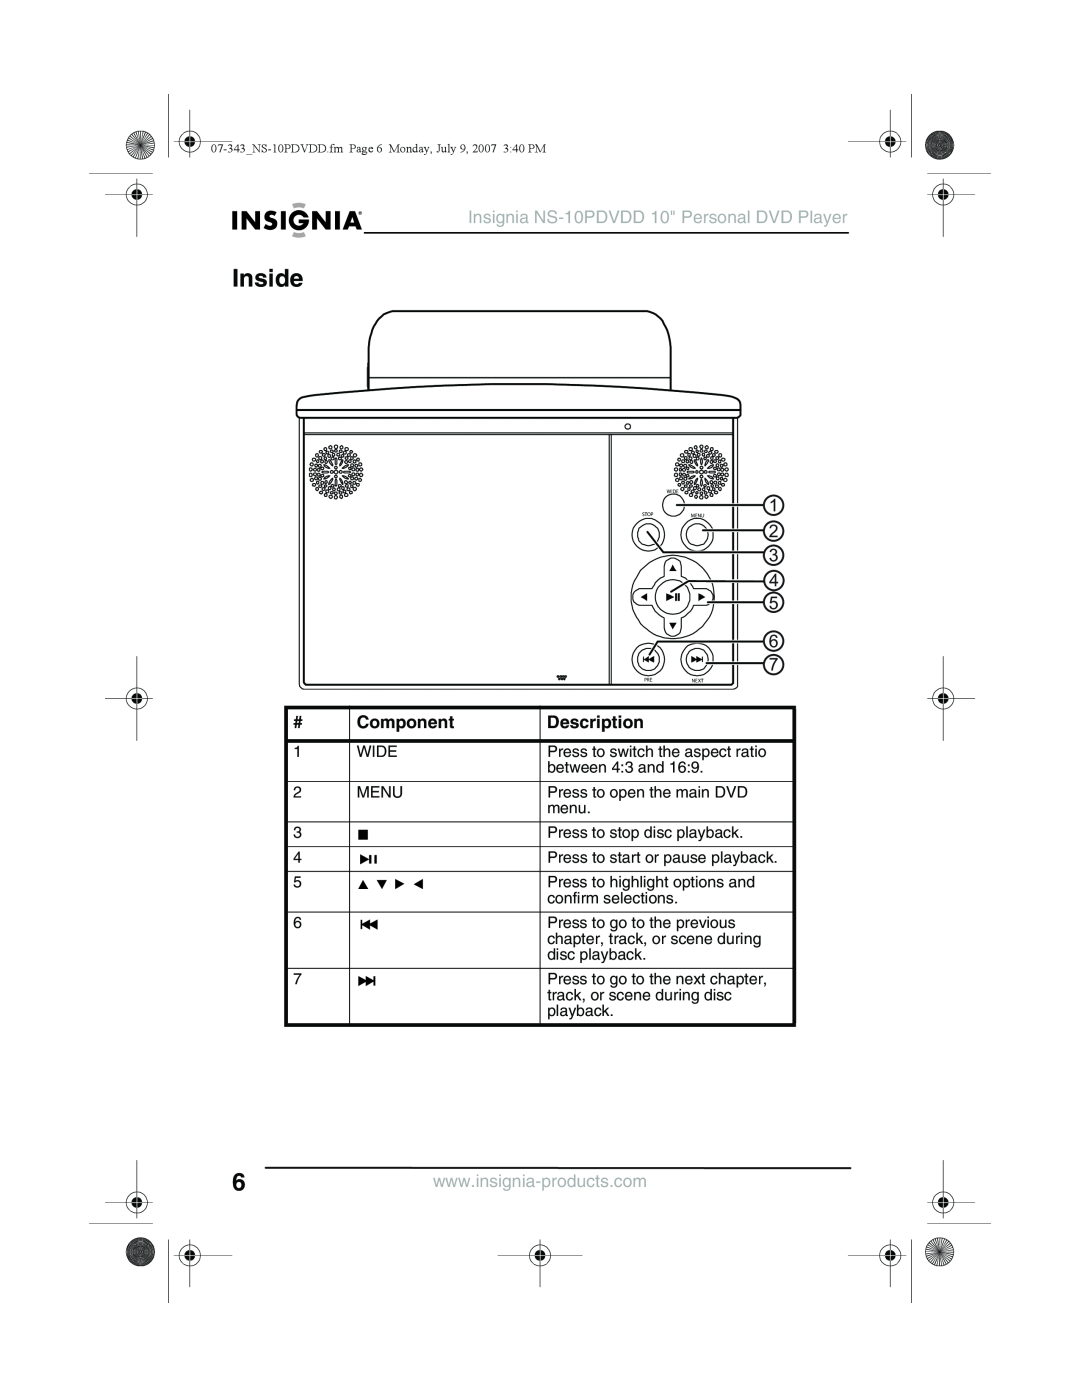 Insignia manual Inside, Insignia NS-10PDVDD 10 Personal DVD Player, Component, Description 